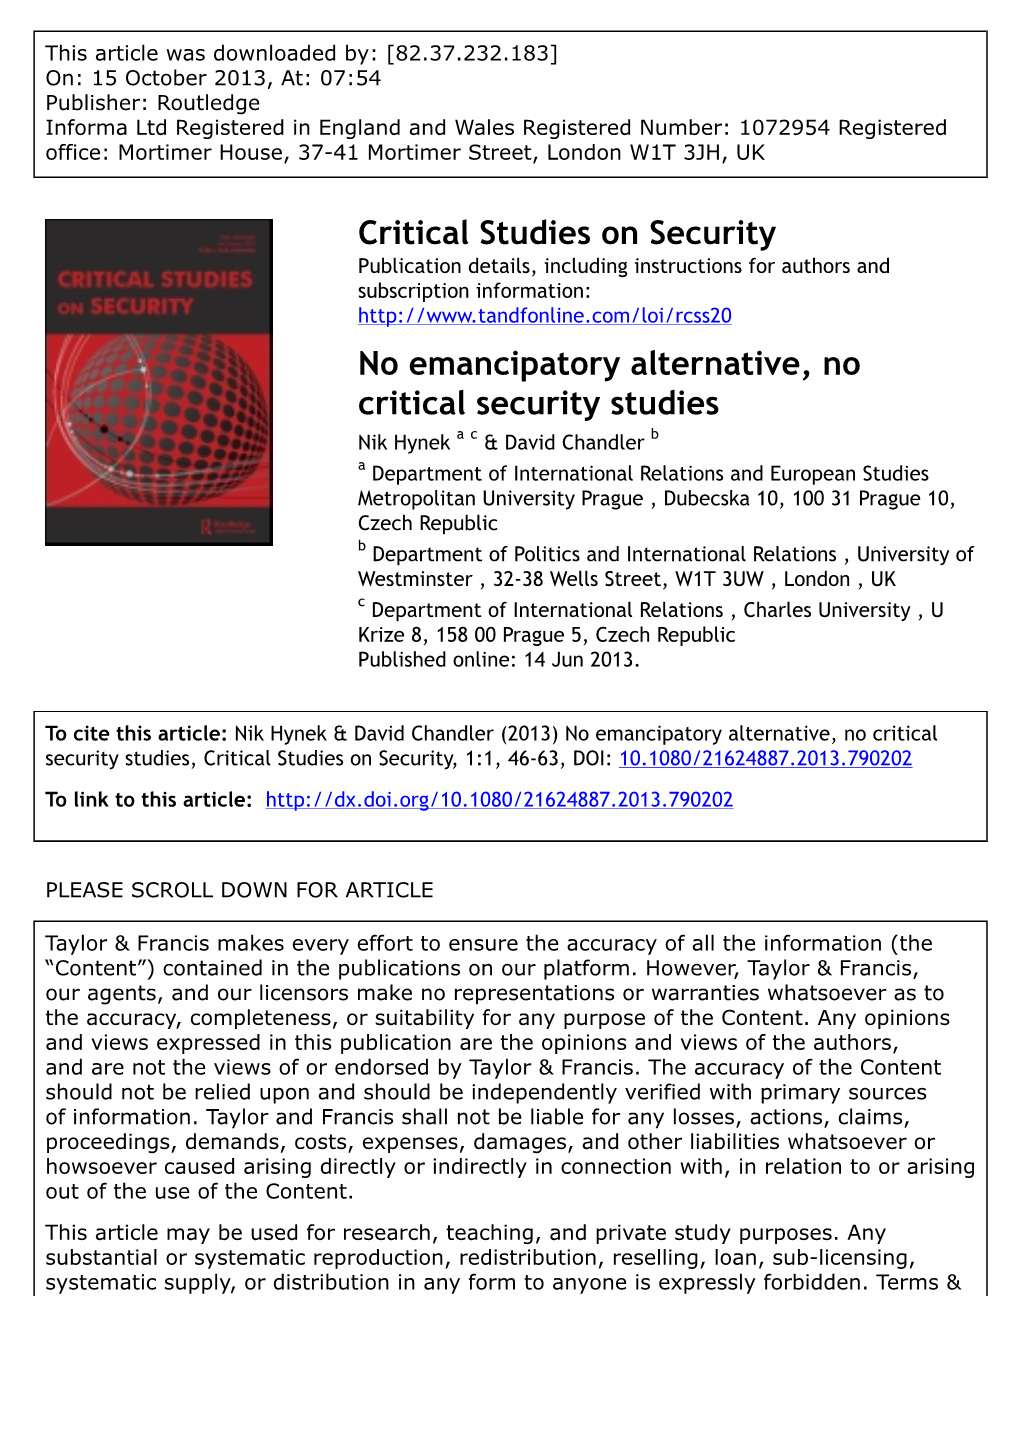 Critical Studies on Security No Emancipatory Alternative, No Critical